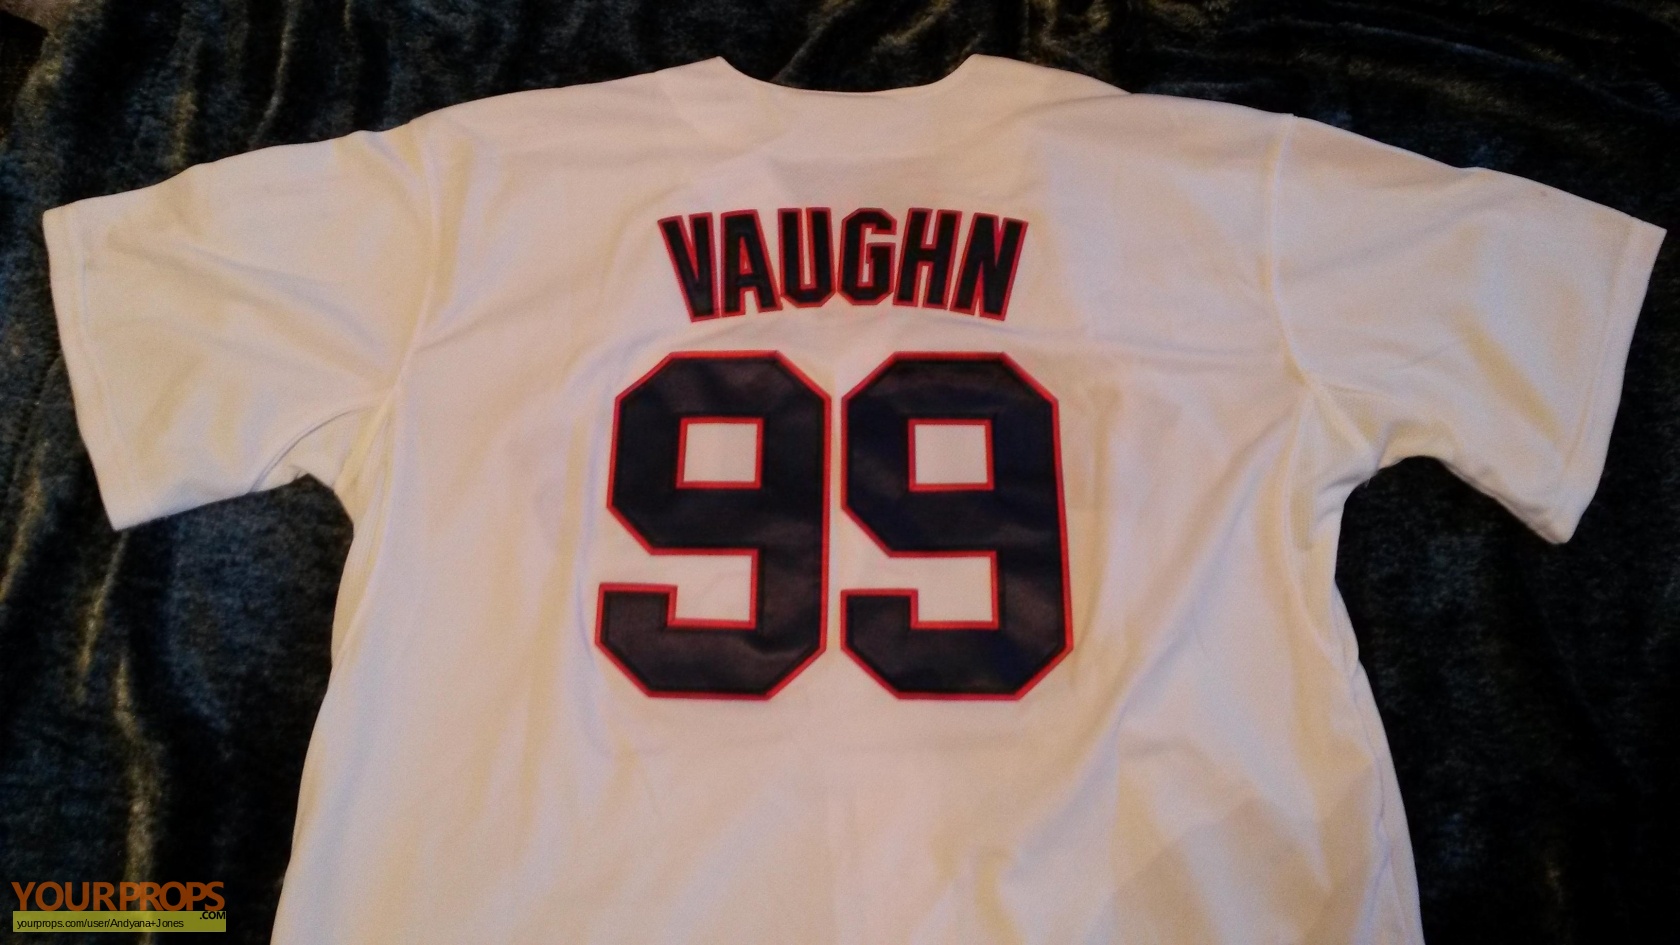 Major League Rick 'Wild Thing' Vaughn Jersey #99 replica movie costume